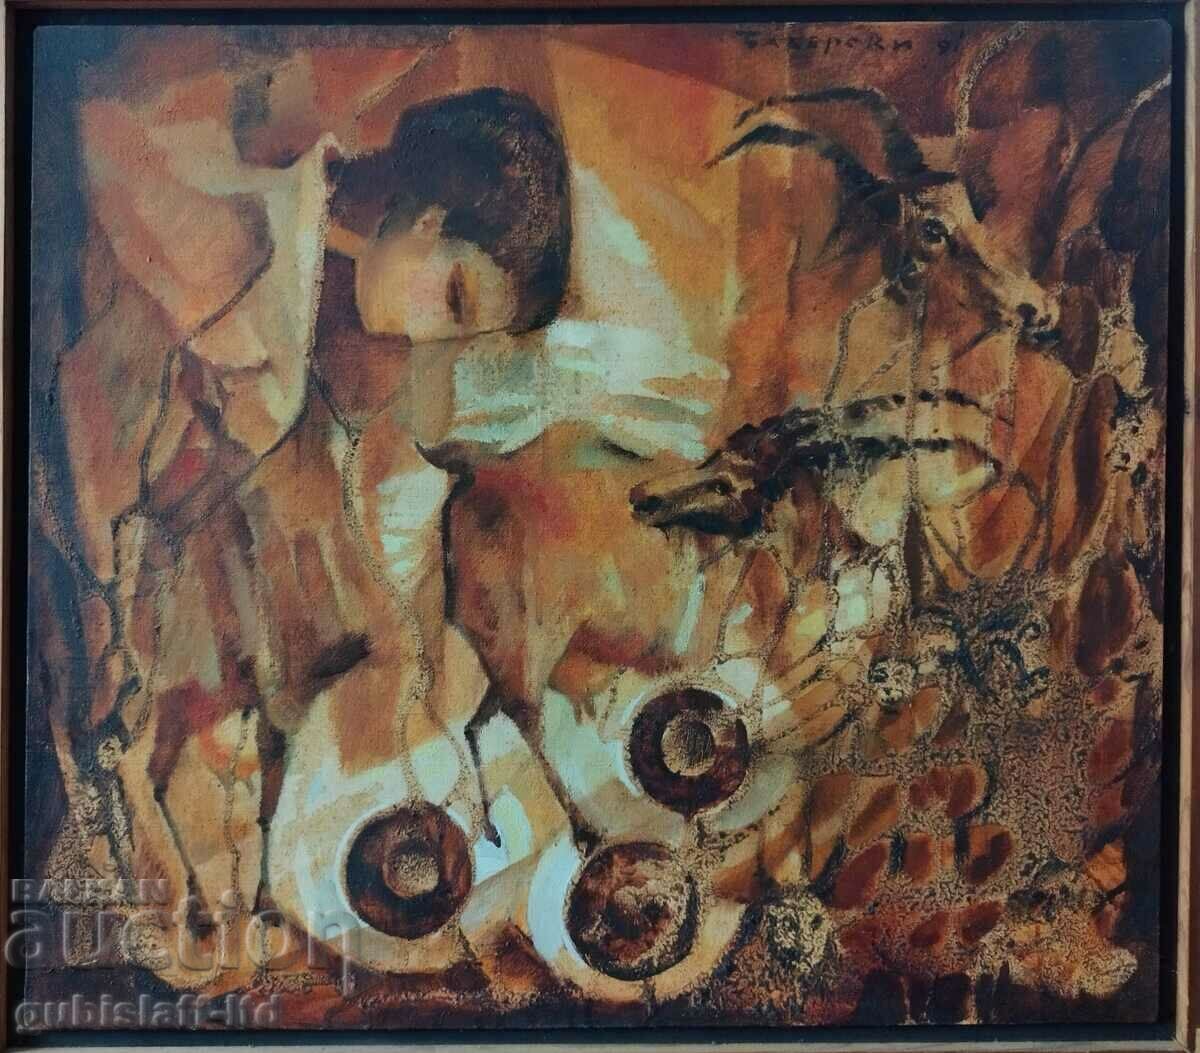 Picture, "Cafe Pastoral", art. Damian Zaberski (1929-2006)